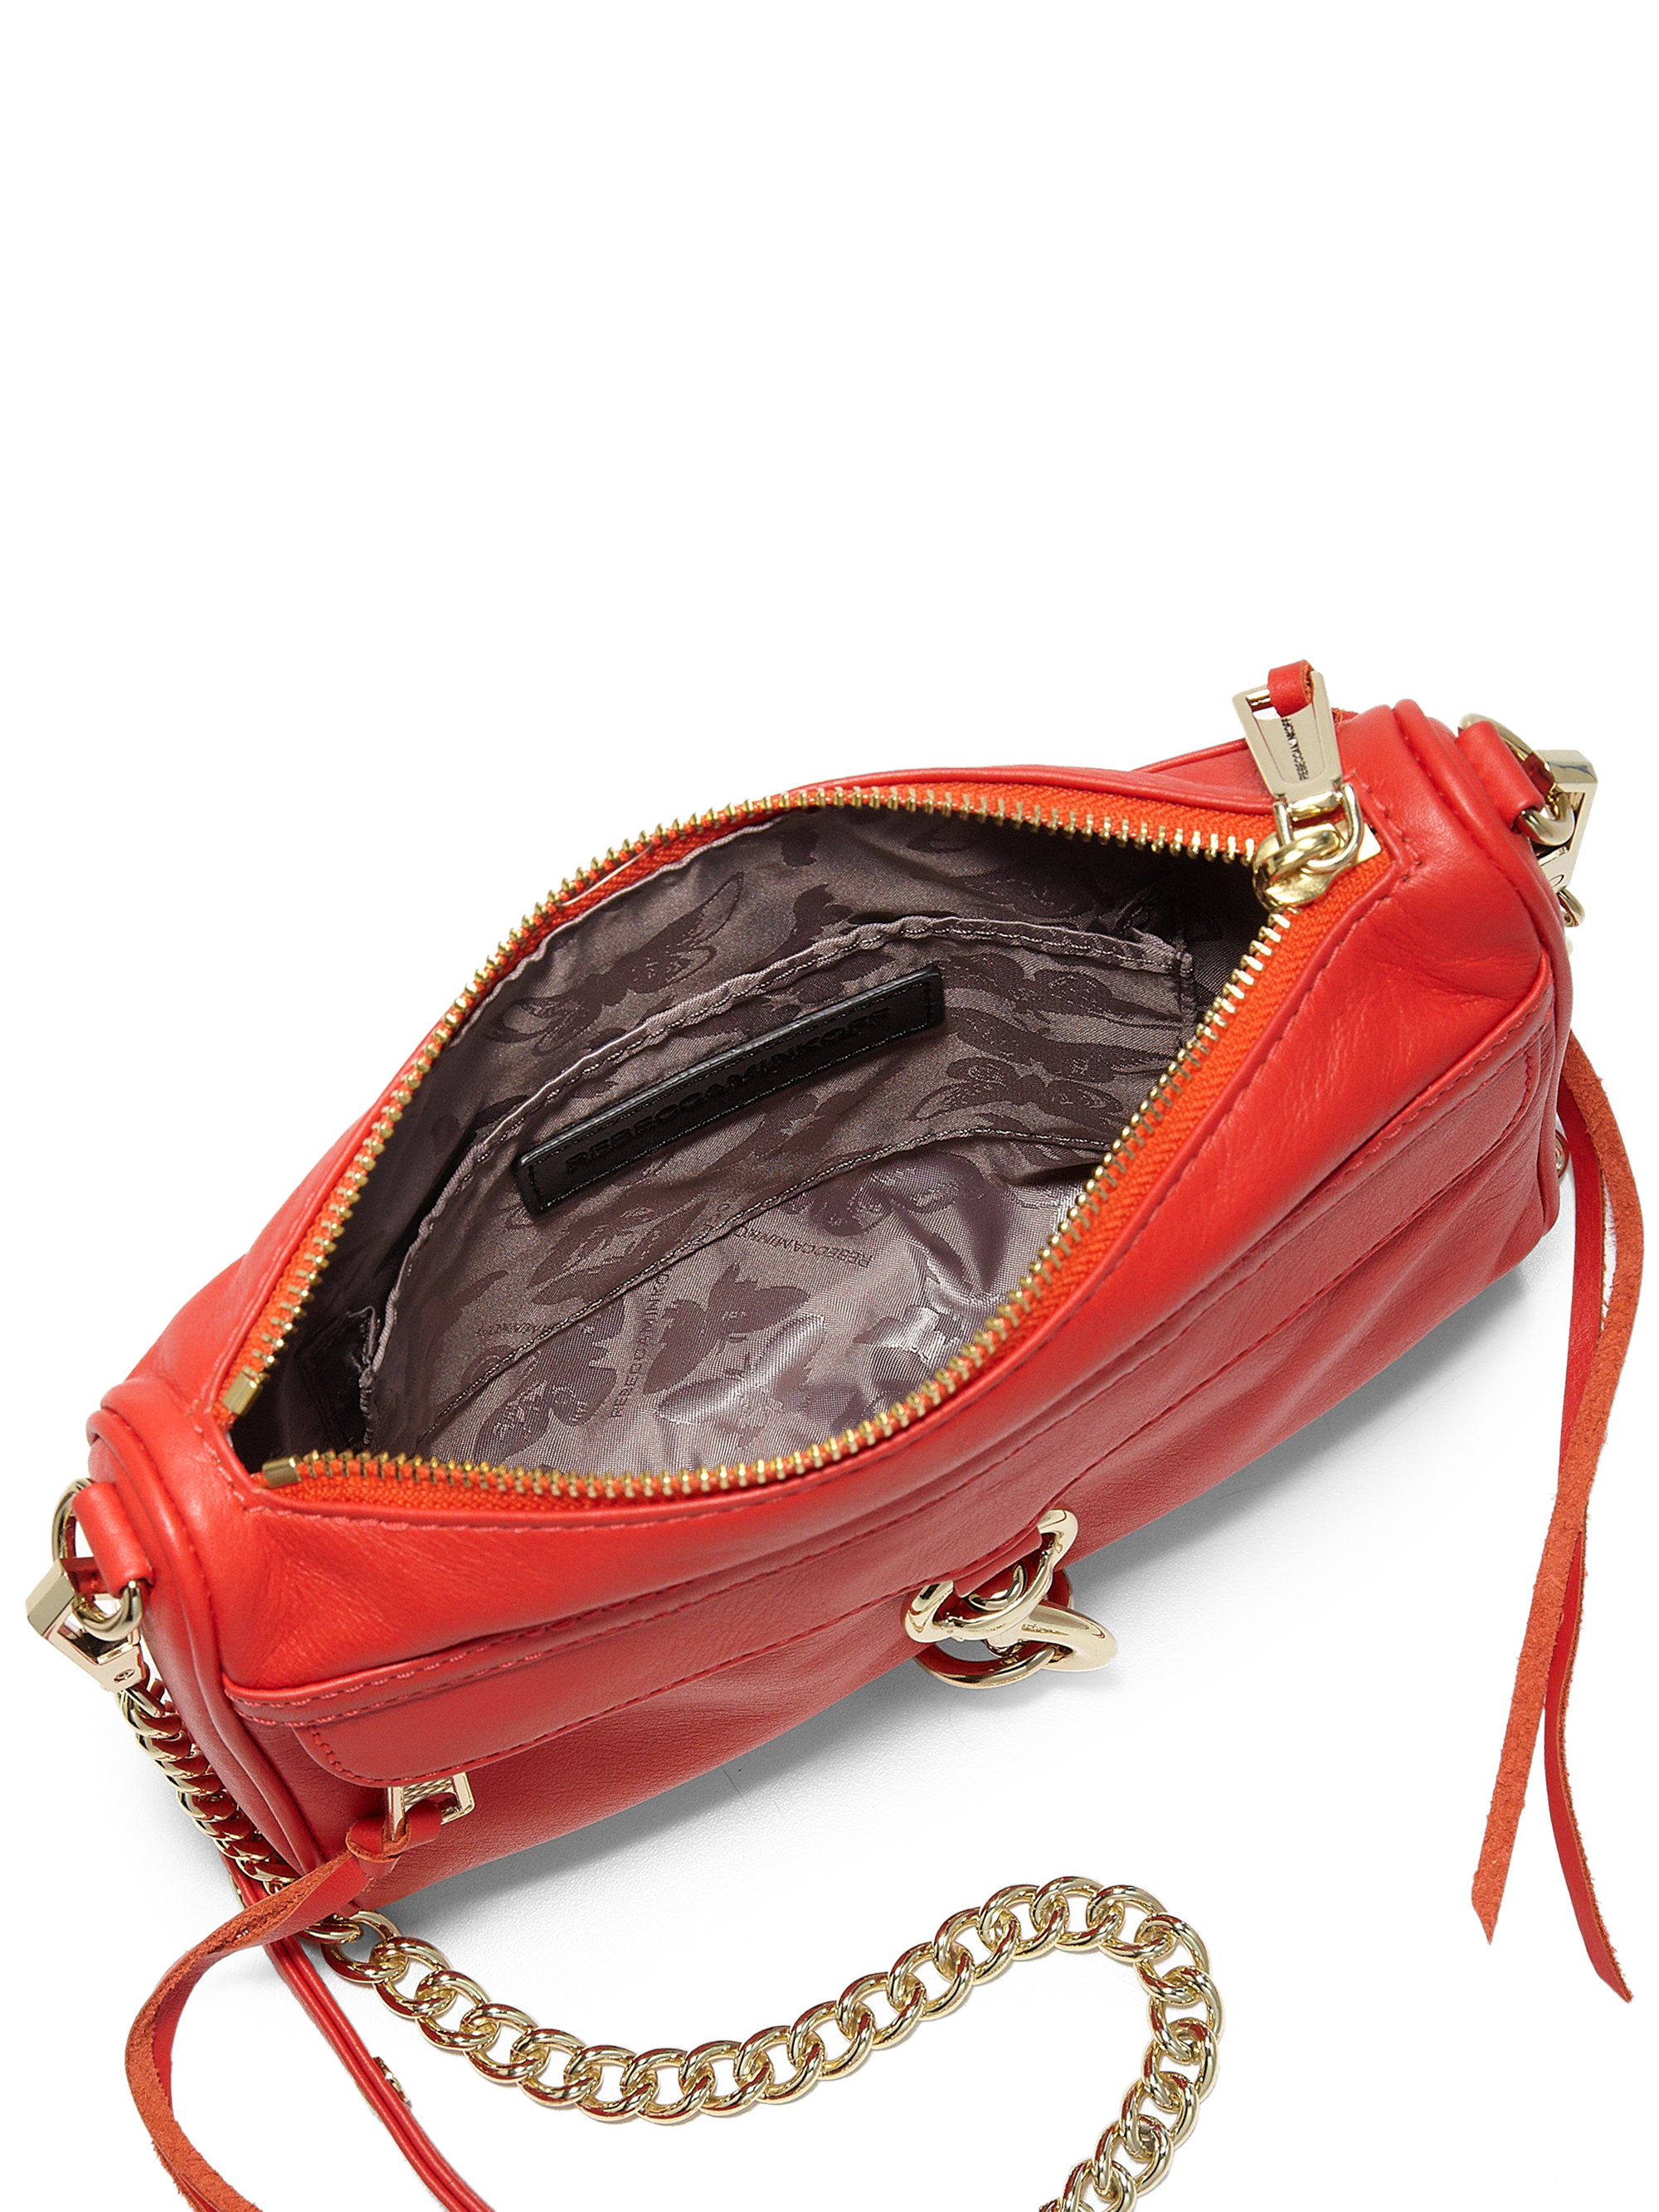 Rebecca minkoff Mini Mac Convertible Leather Crossbody Bag in Red (cherry) | Lyst